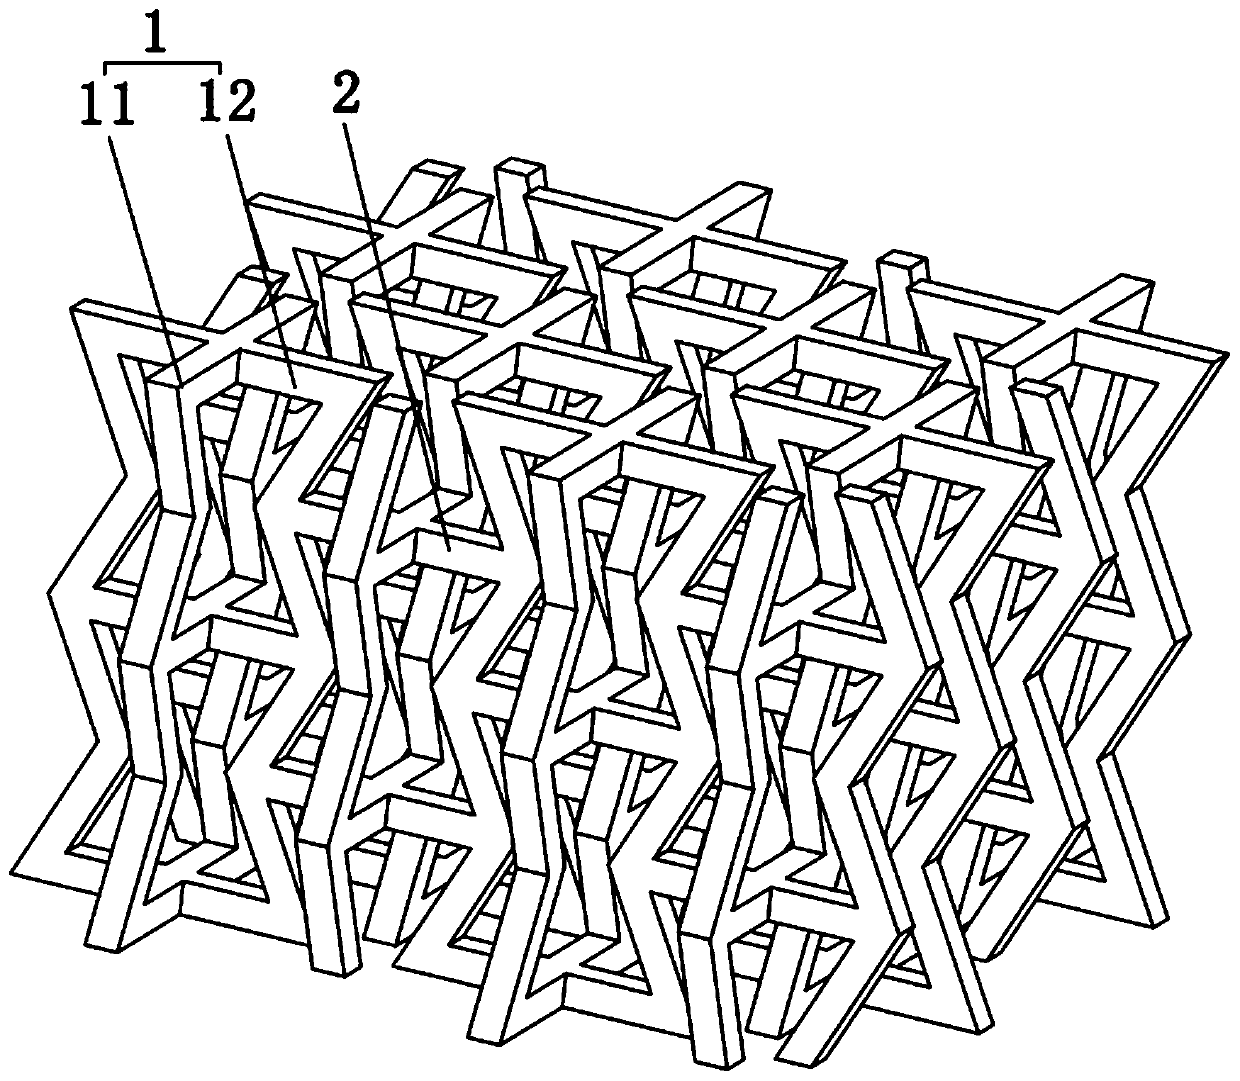 Novel three-dimensional negative Poisson's ratio honeycomb structure